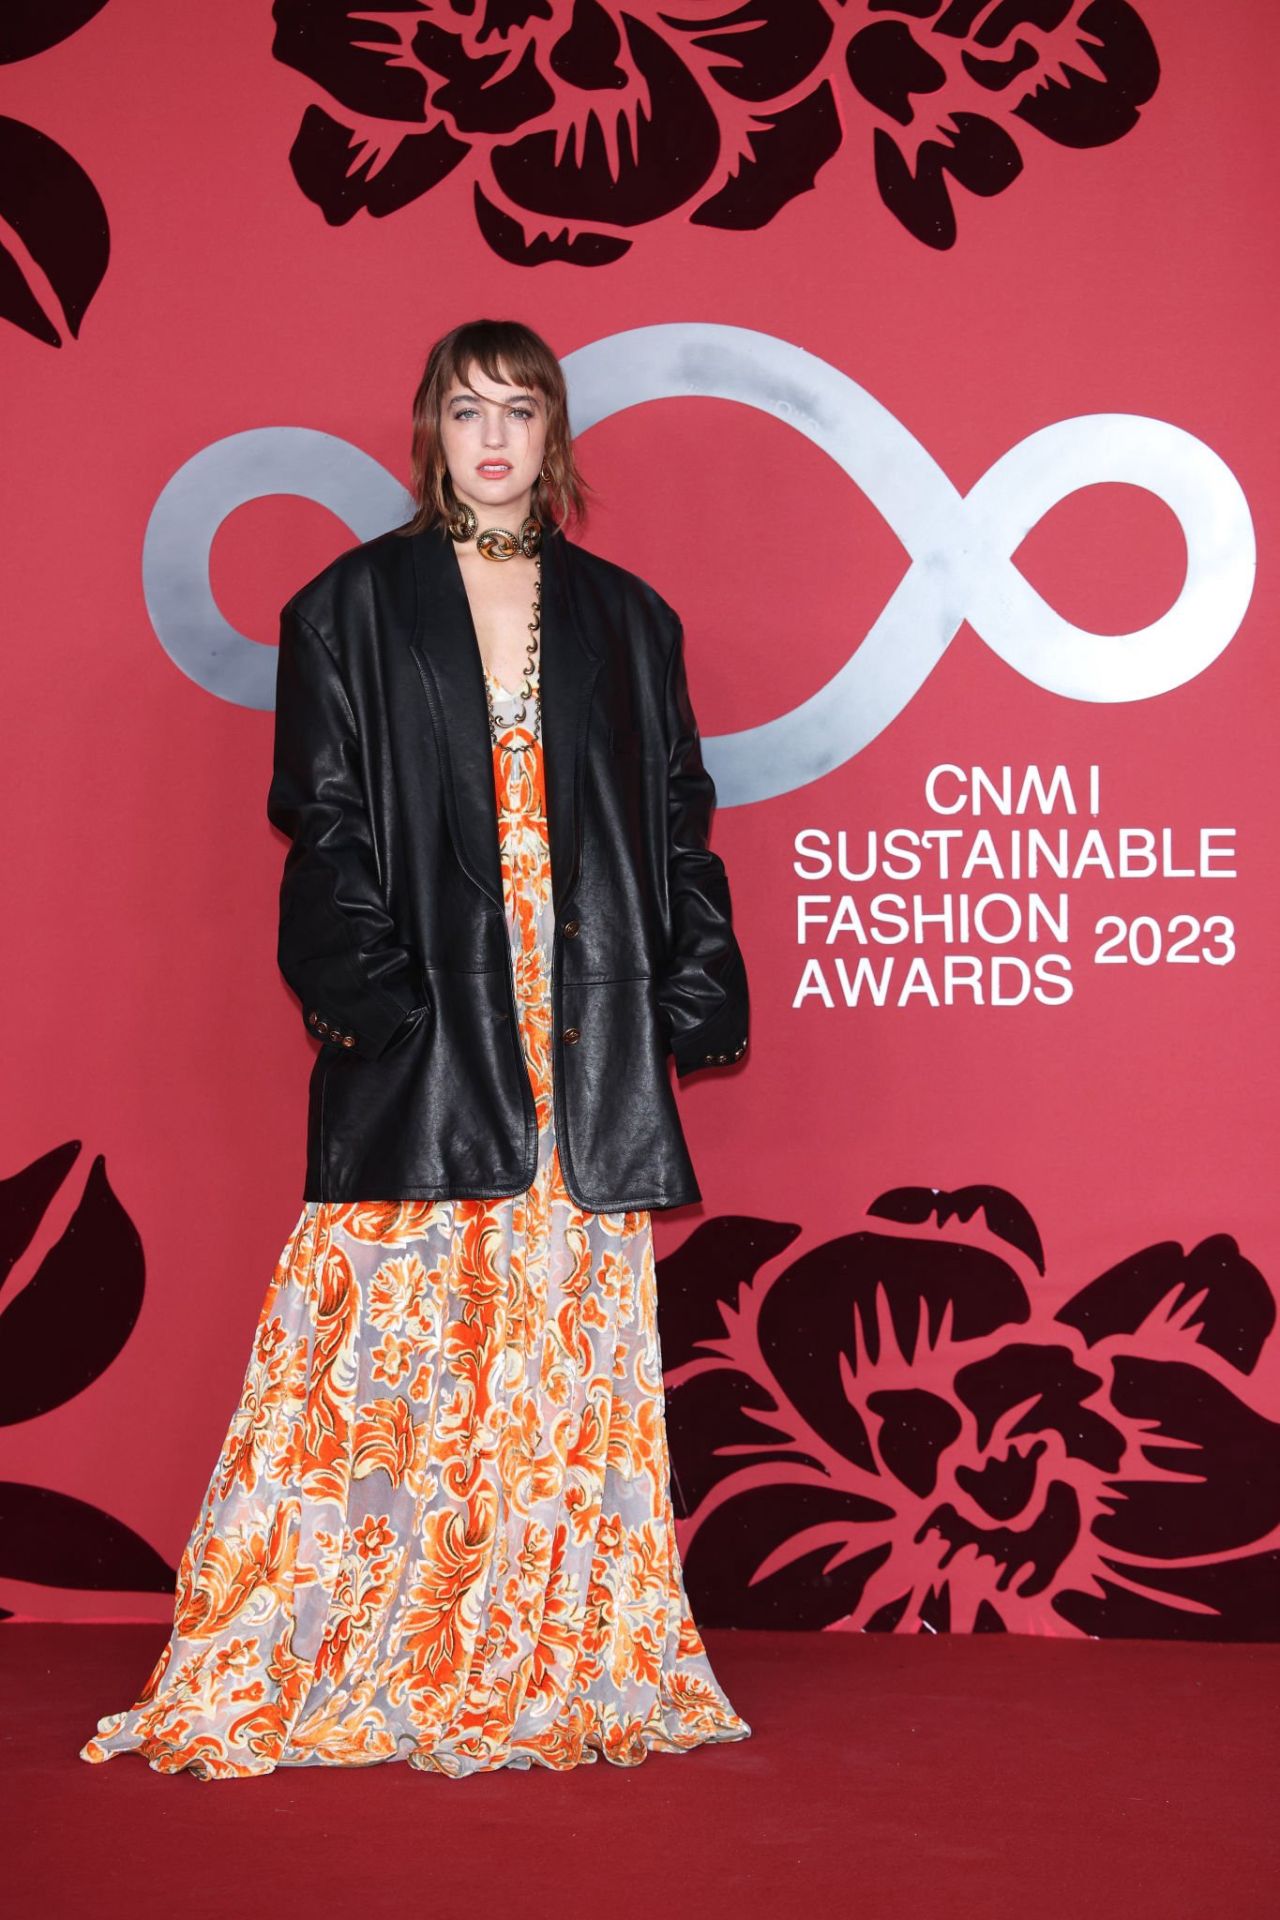 Beatrice Grannò CNMI Sustainable Fashion Awards 2023 in Milan